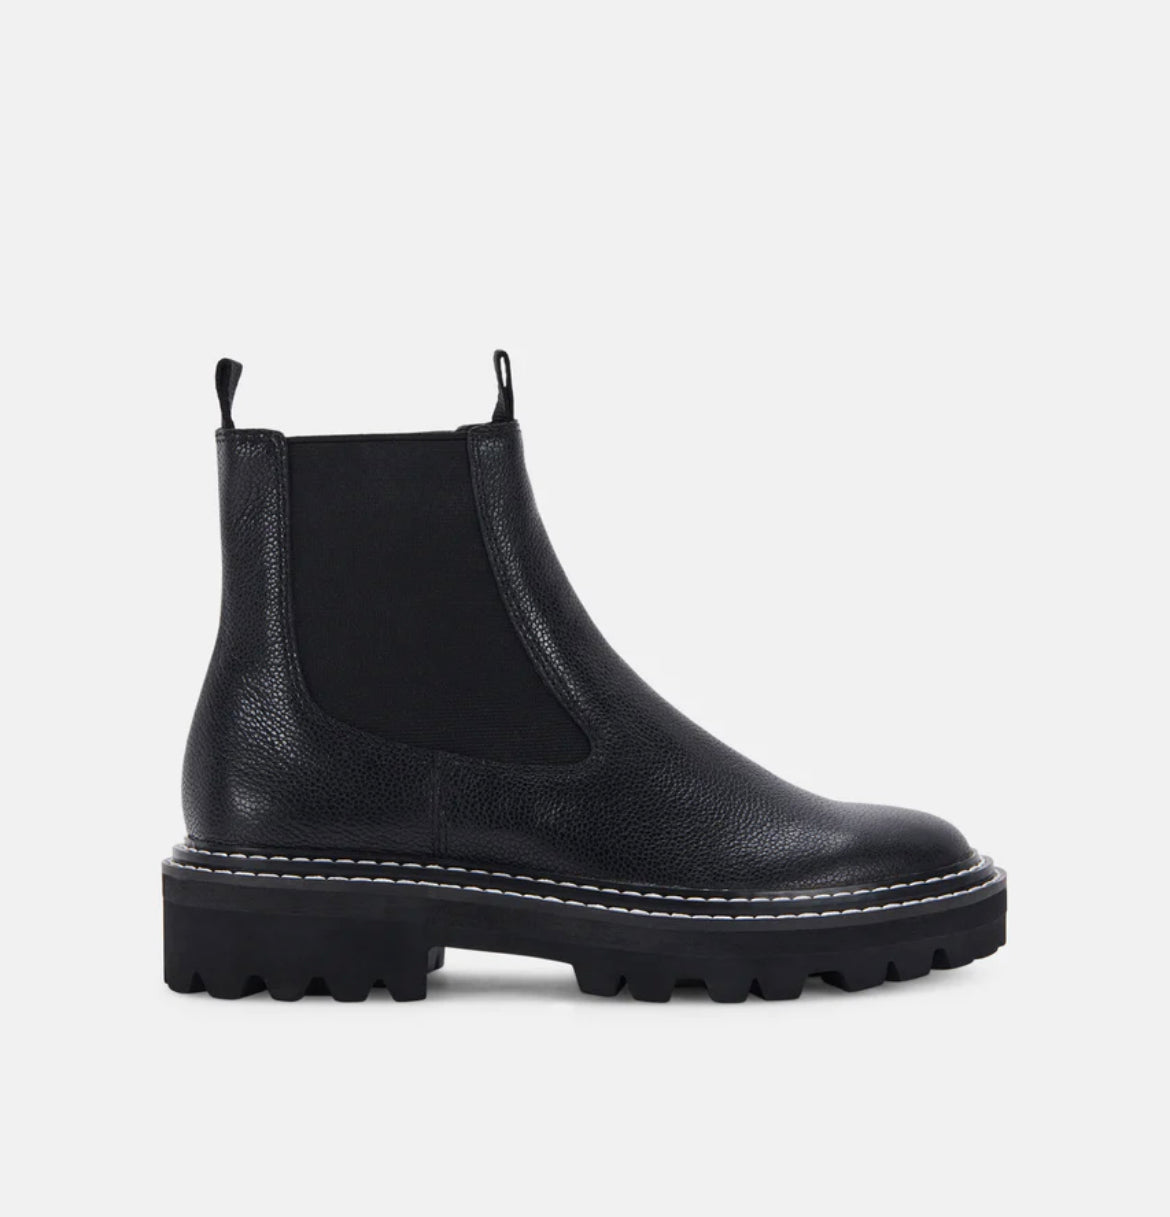 Moana H2O Boots Black Leather